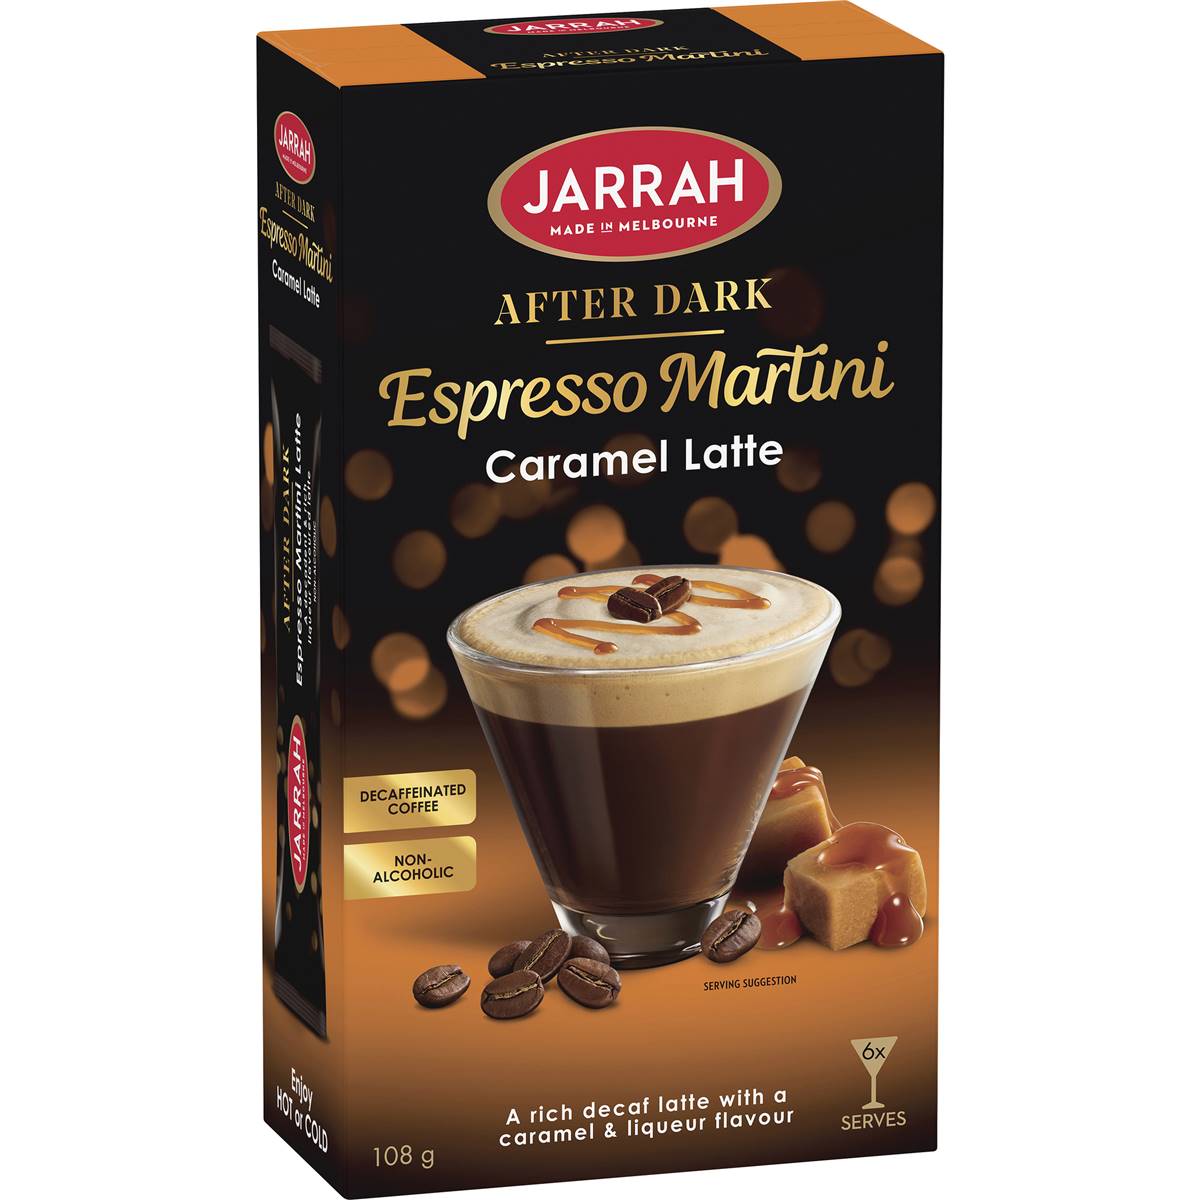 Calories in Jarrah After Dark Espresso Martini Caramel Latte